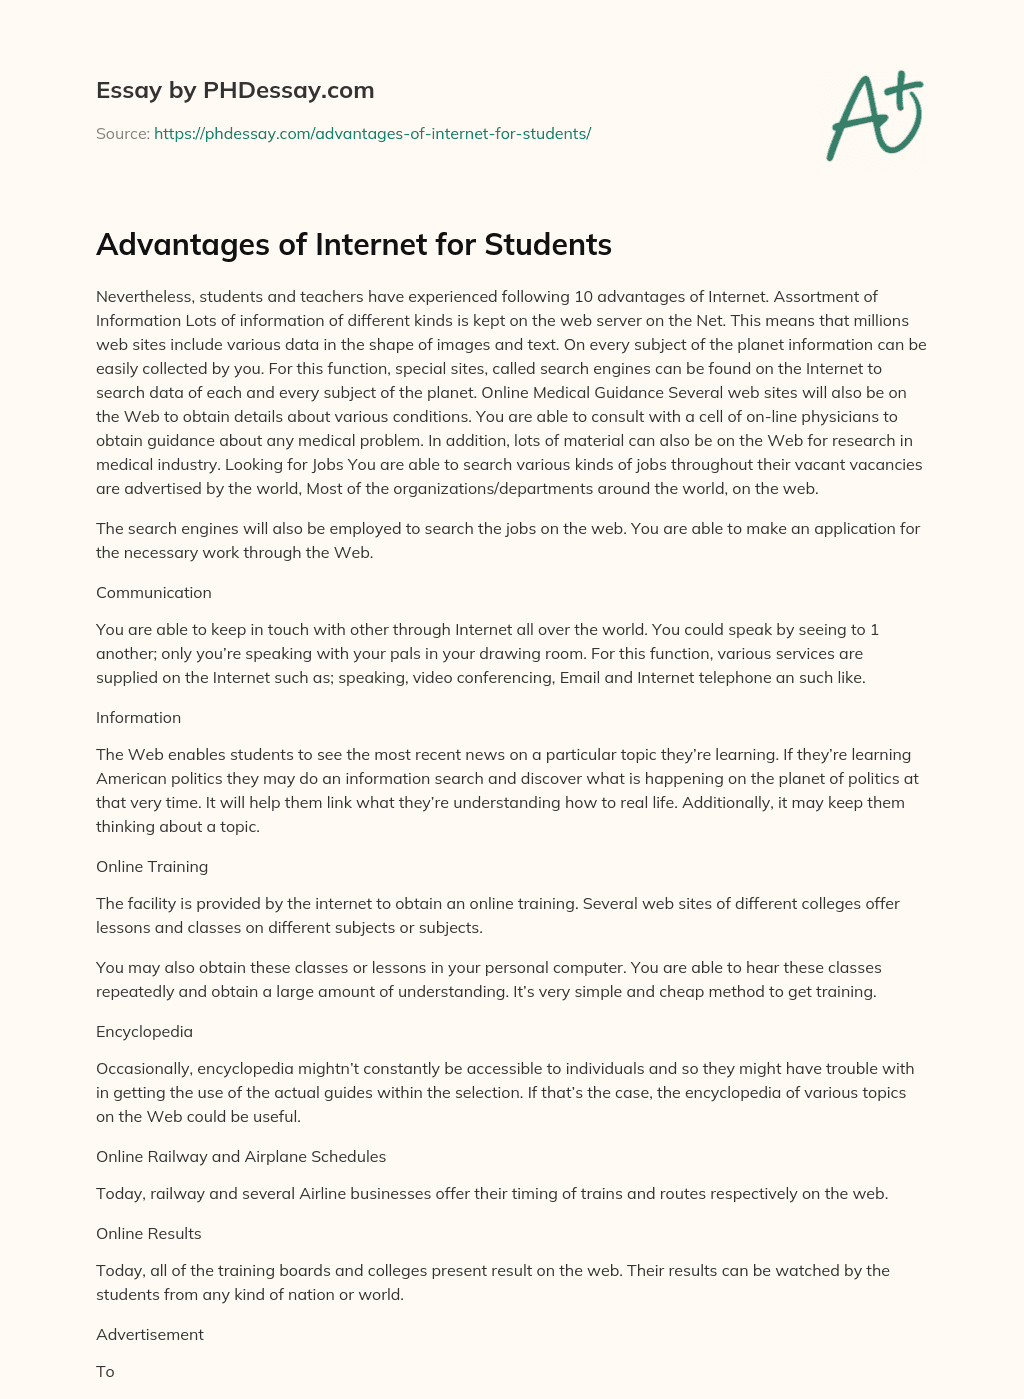 essay writing internet advantages